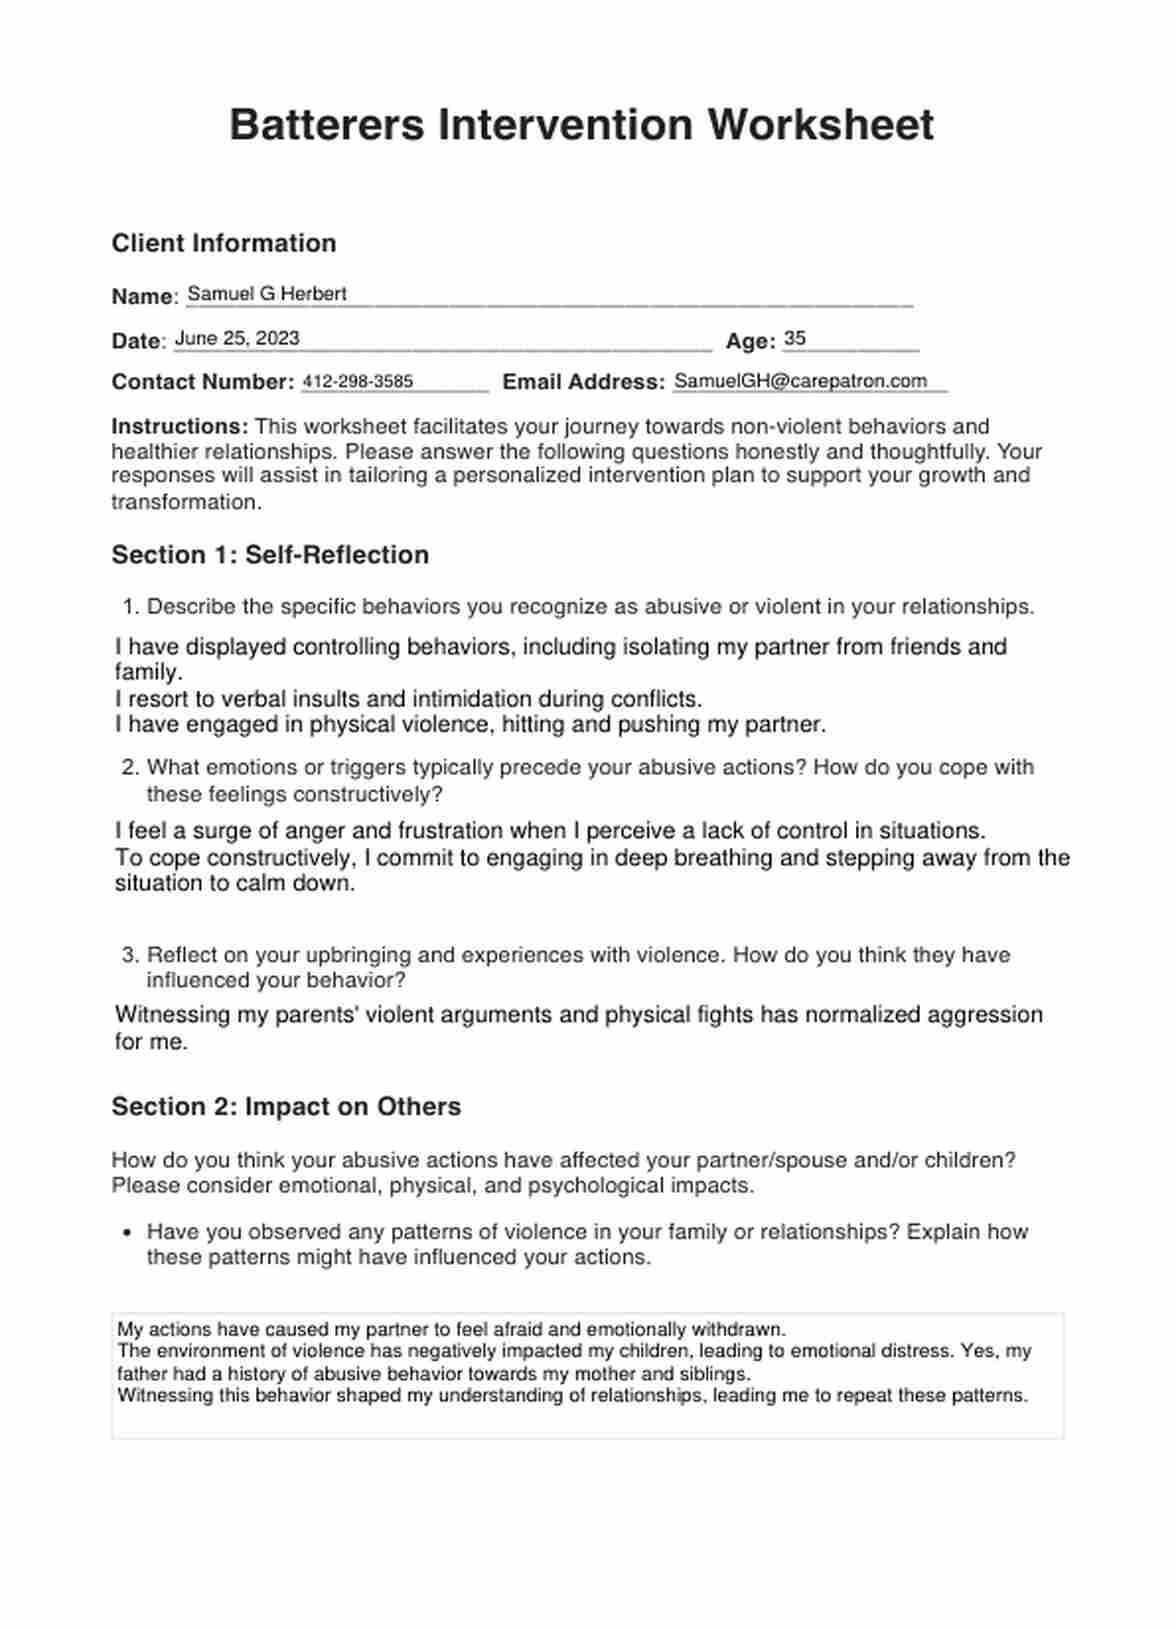 Batterers Intervention Worksheet PDF Example